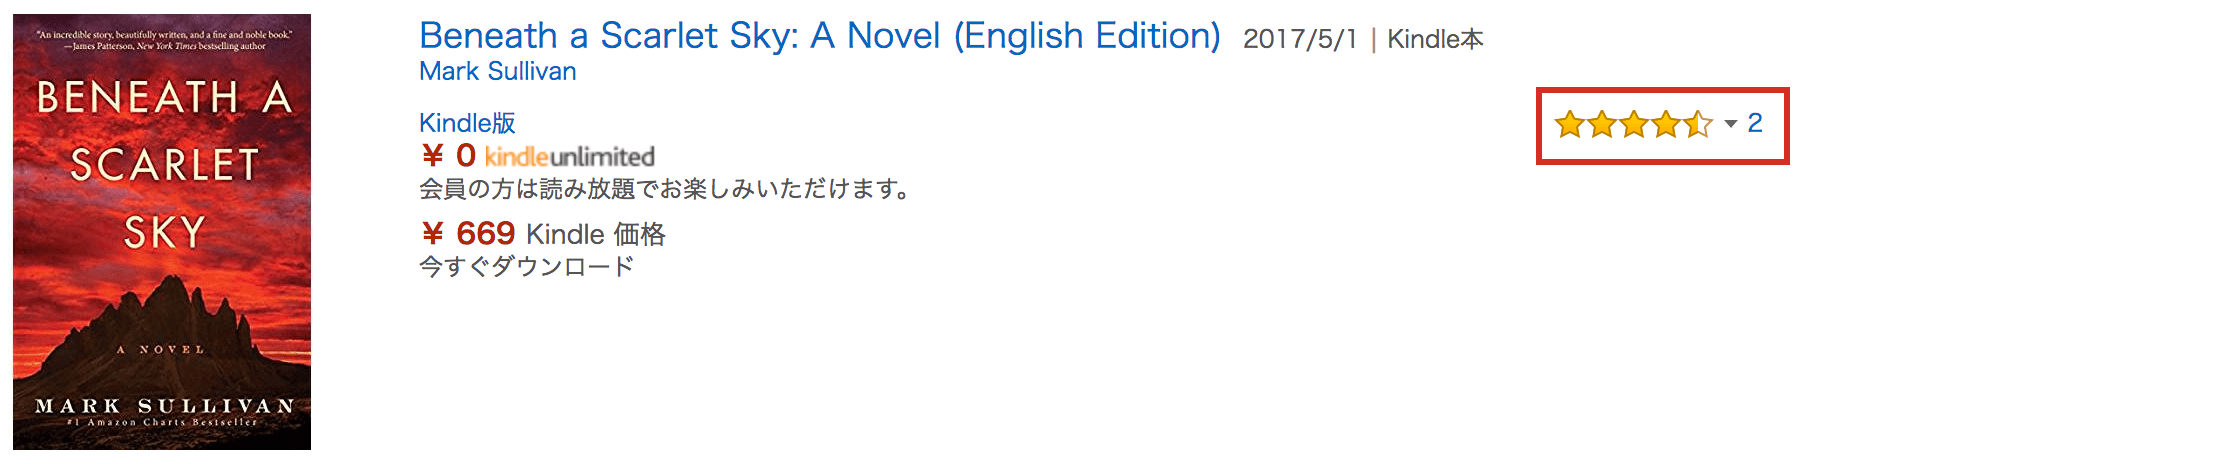 Amazon.co.jpのホームページ